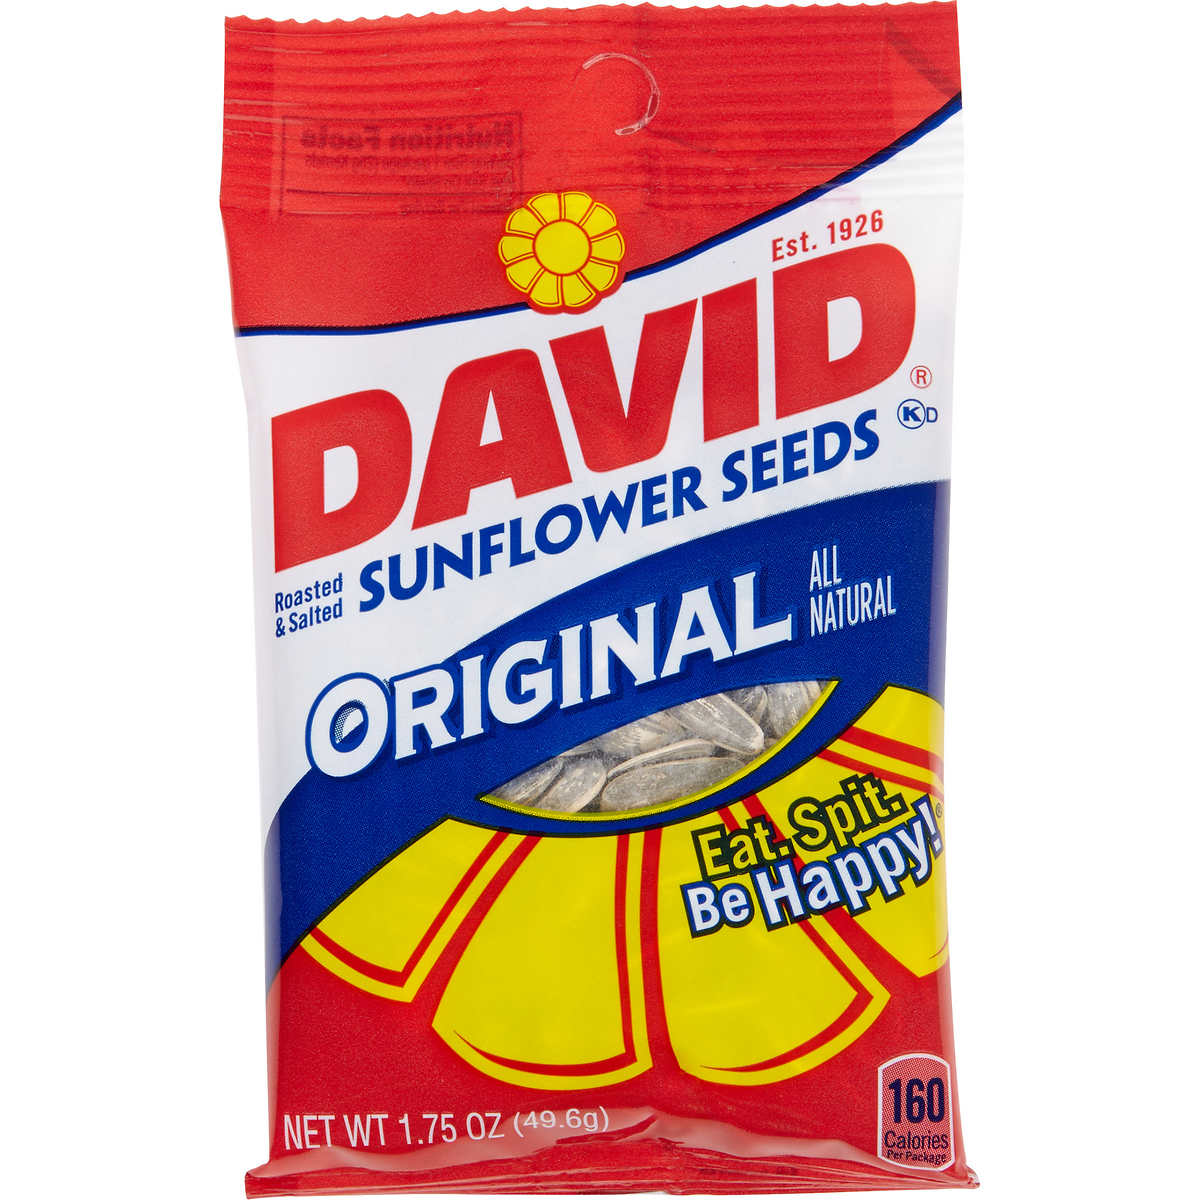 David Original Sunflower In-Shell Seeds, 1.75 oz, 24-count